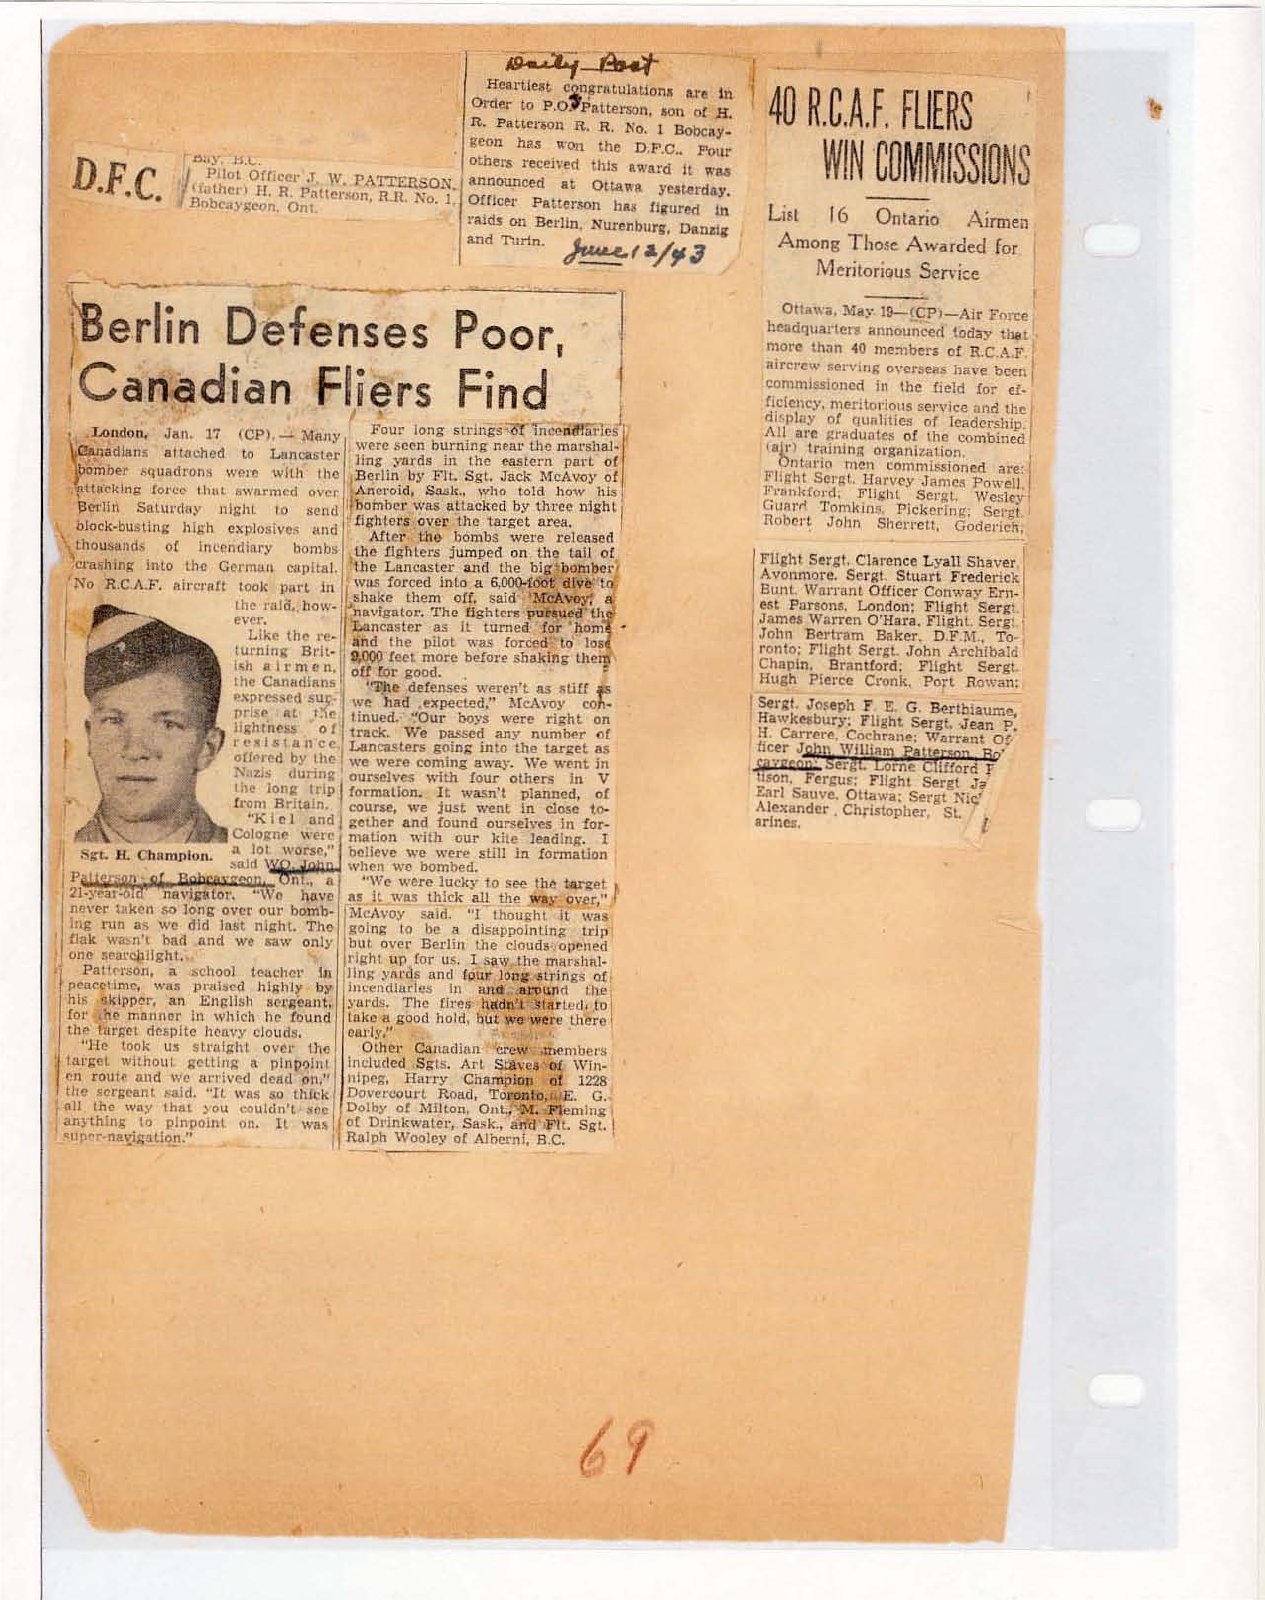 Page 67: Berlin Defenses Poor, Canadian Fliers Find